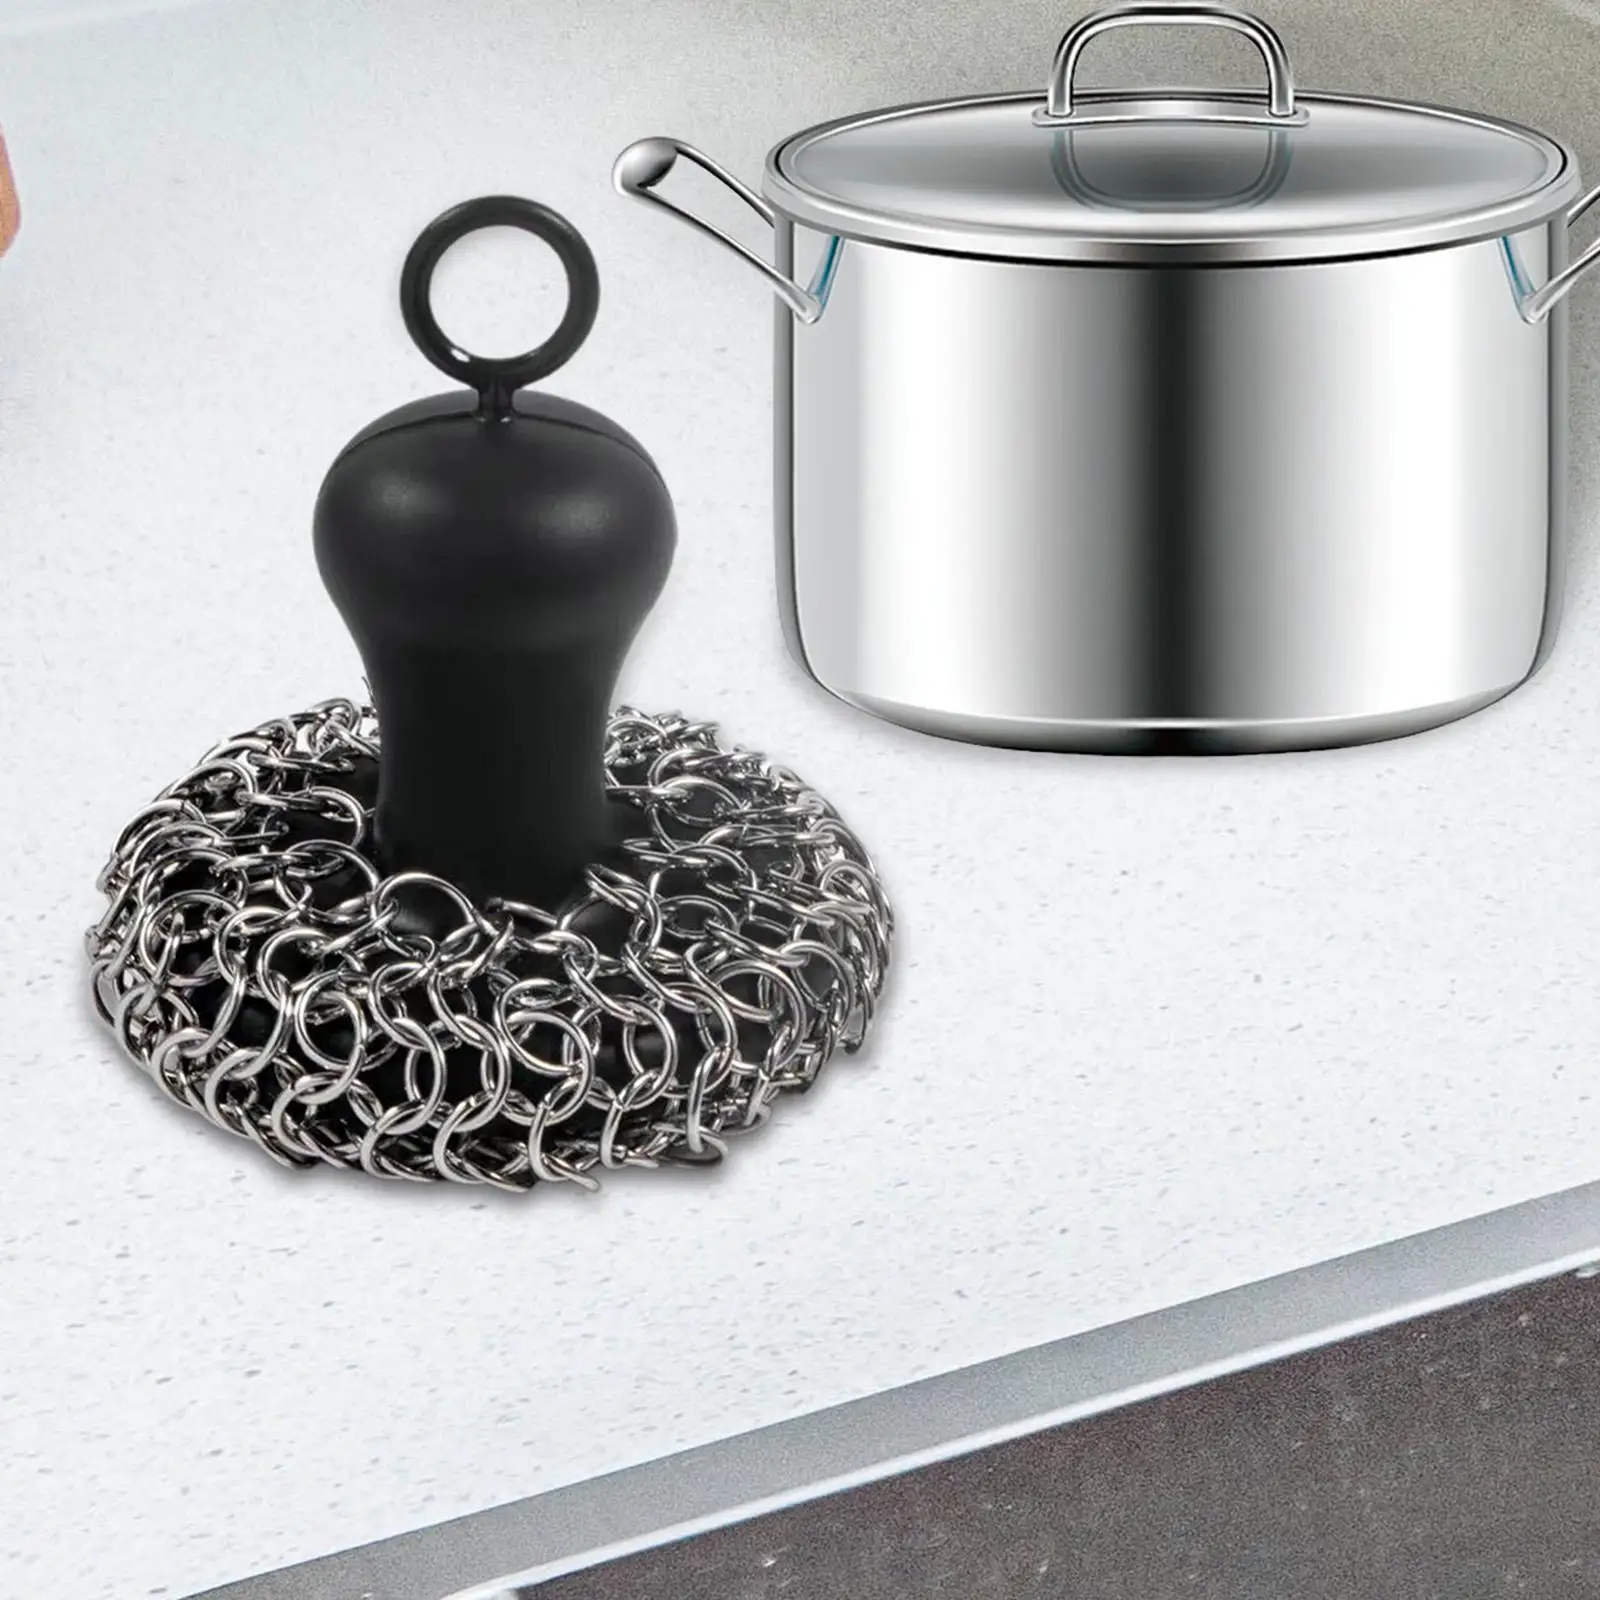 316 Stainless Steel Dishwashing Brush Dish Scrubber with Handle Pot Brush Dish Cleaning Ball for Pot Kitchen Pan Utensils Bowl